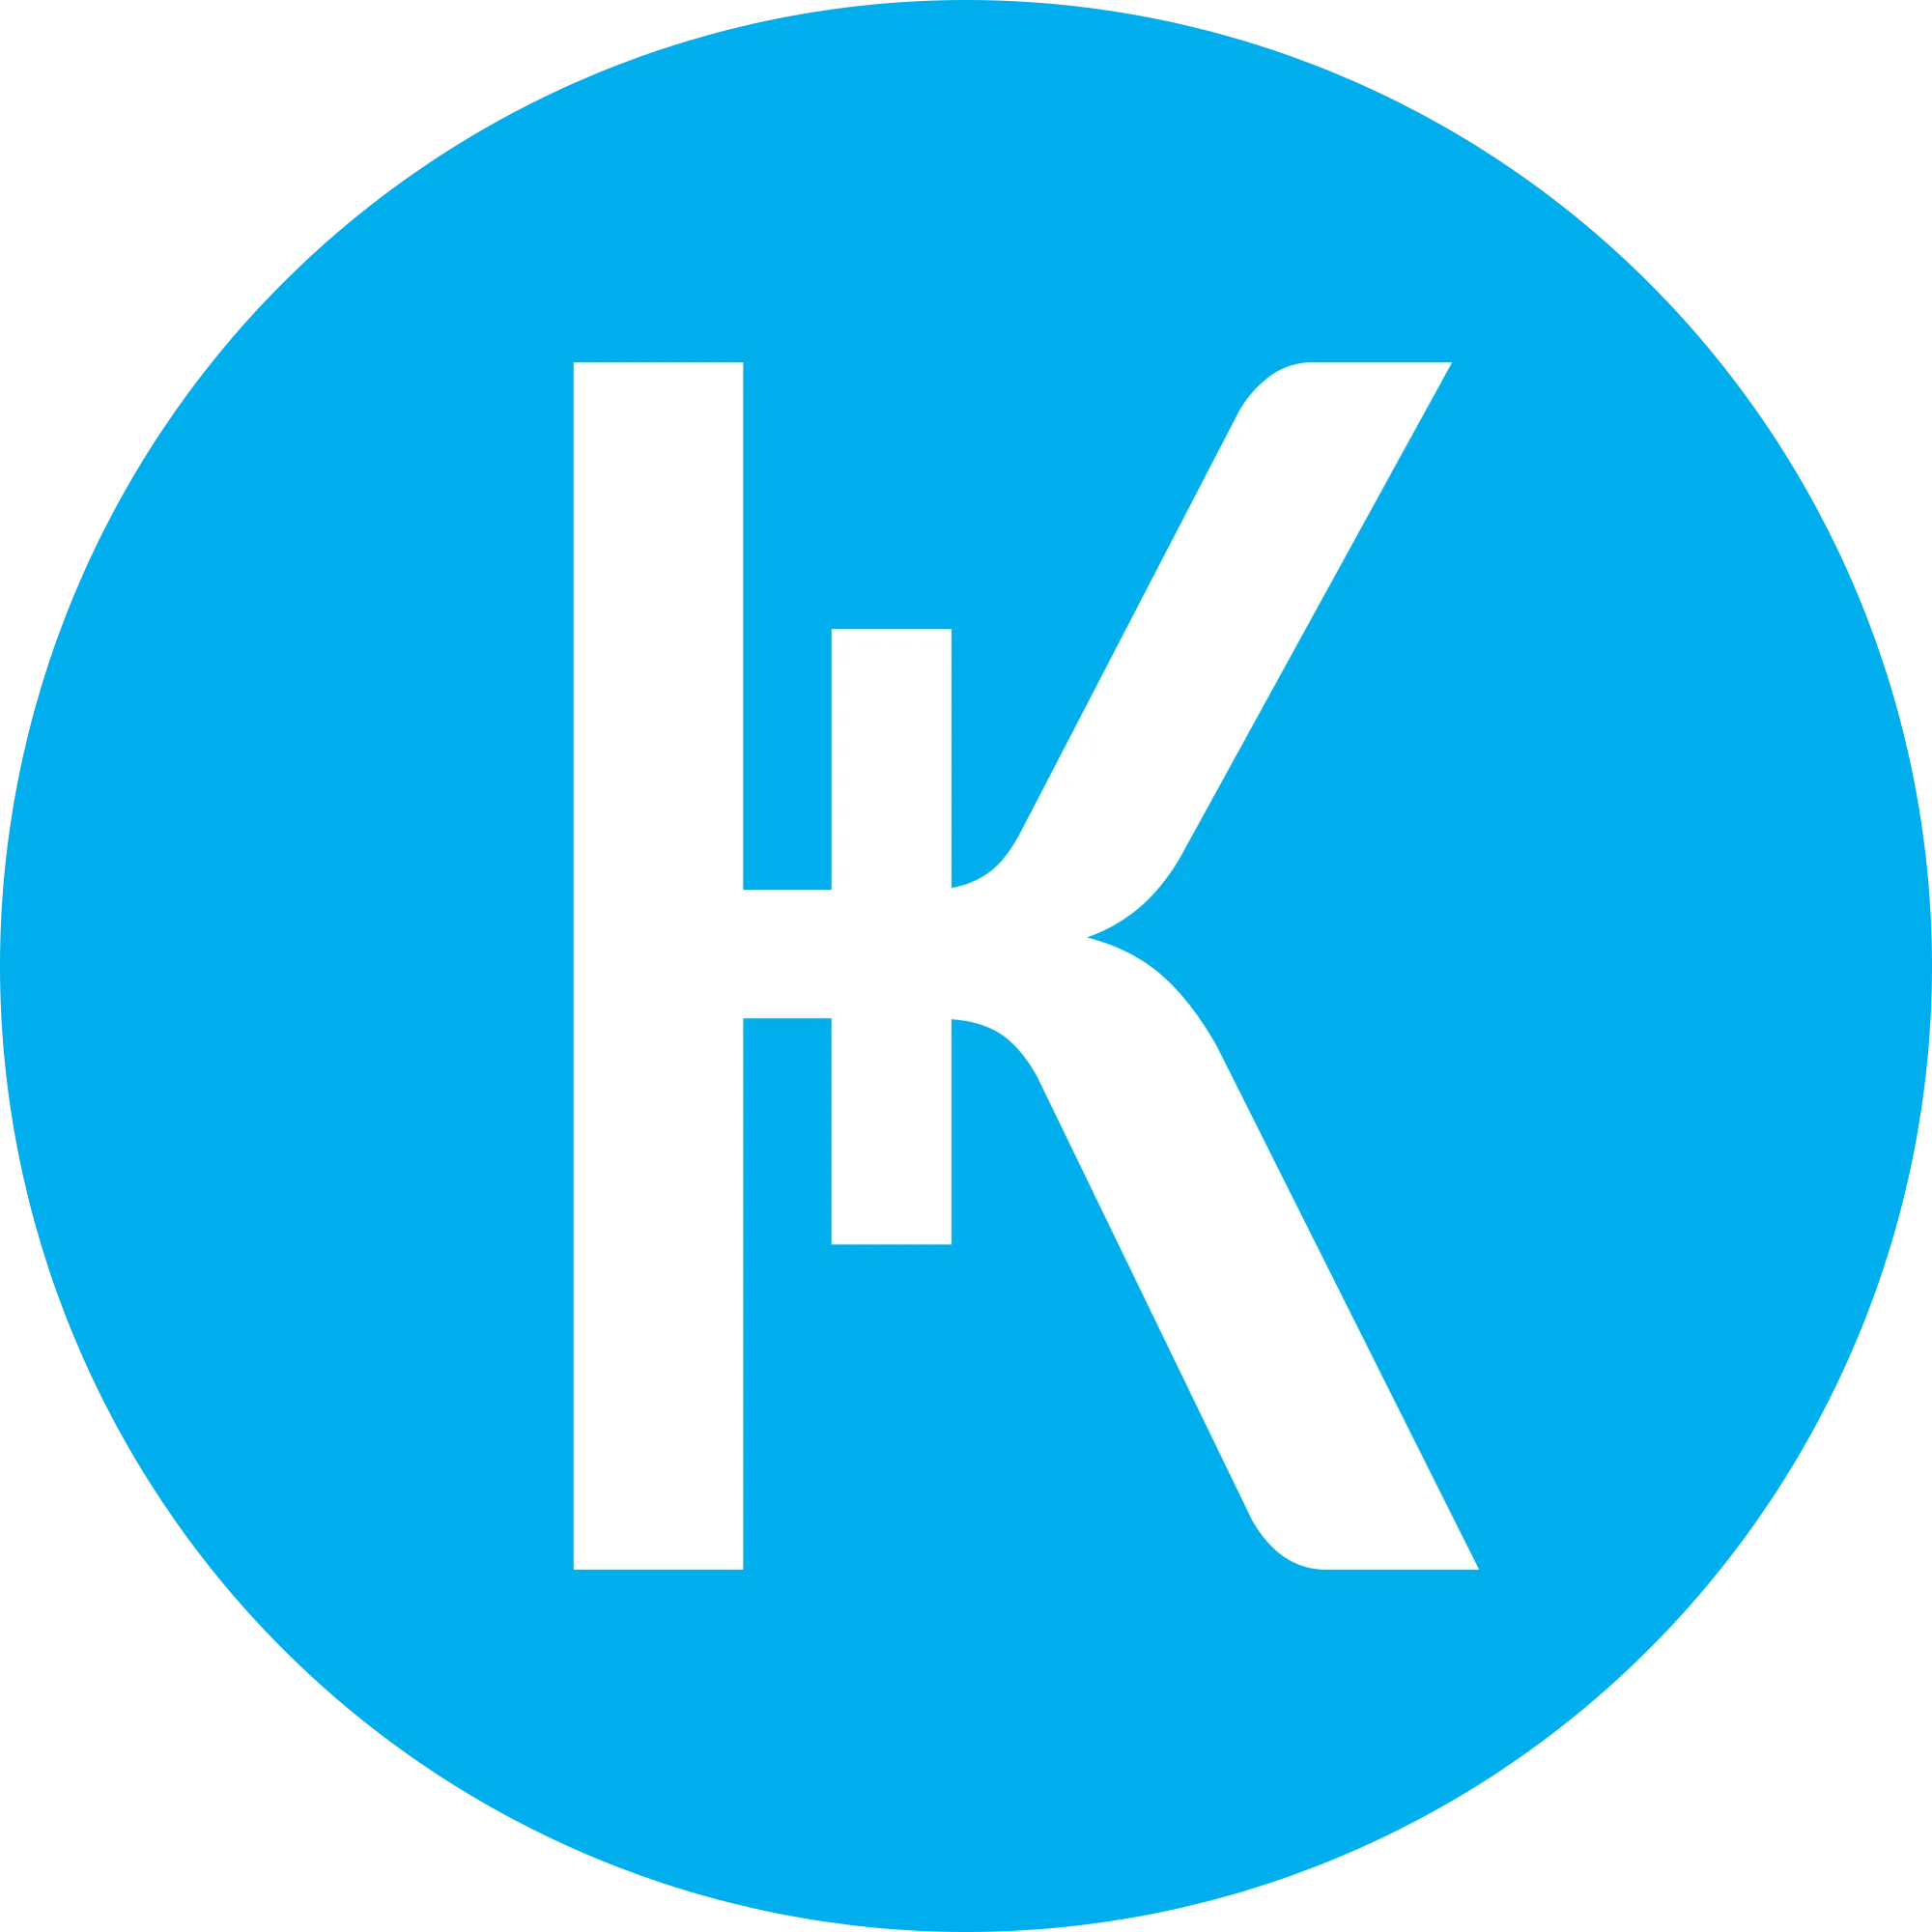 Karbo logo in png format